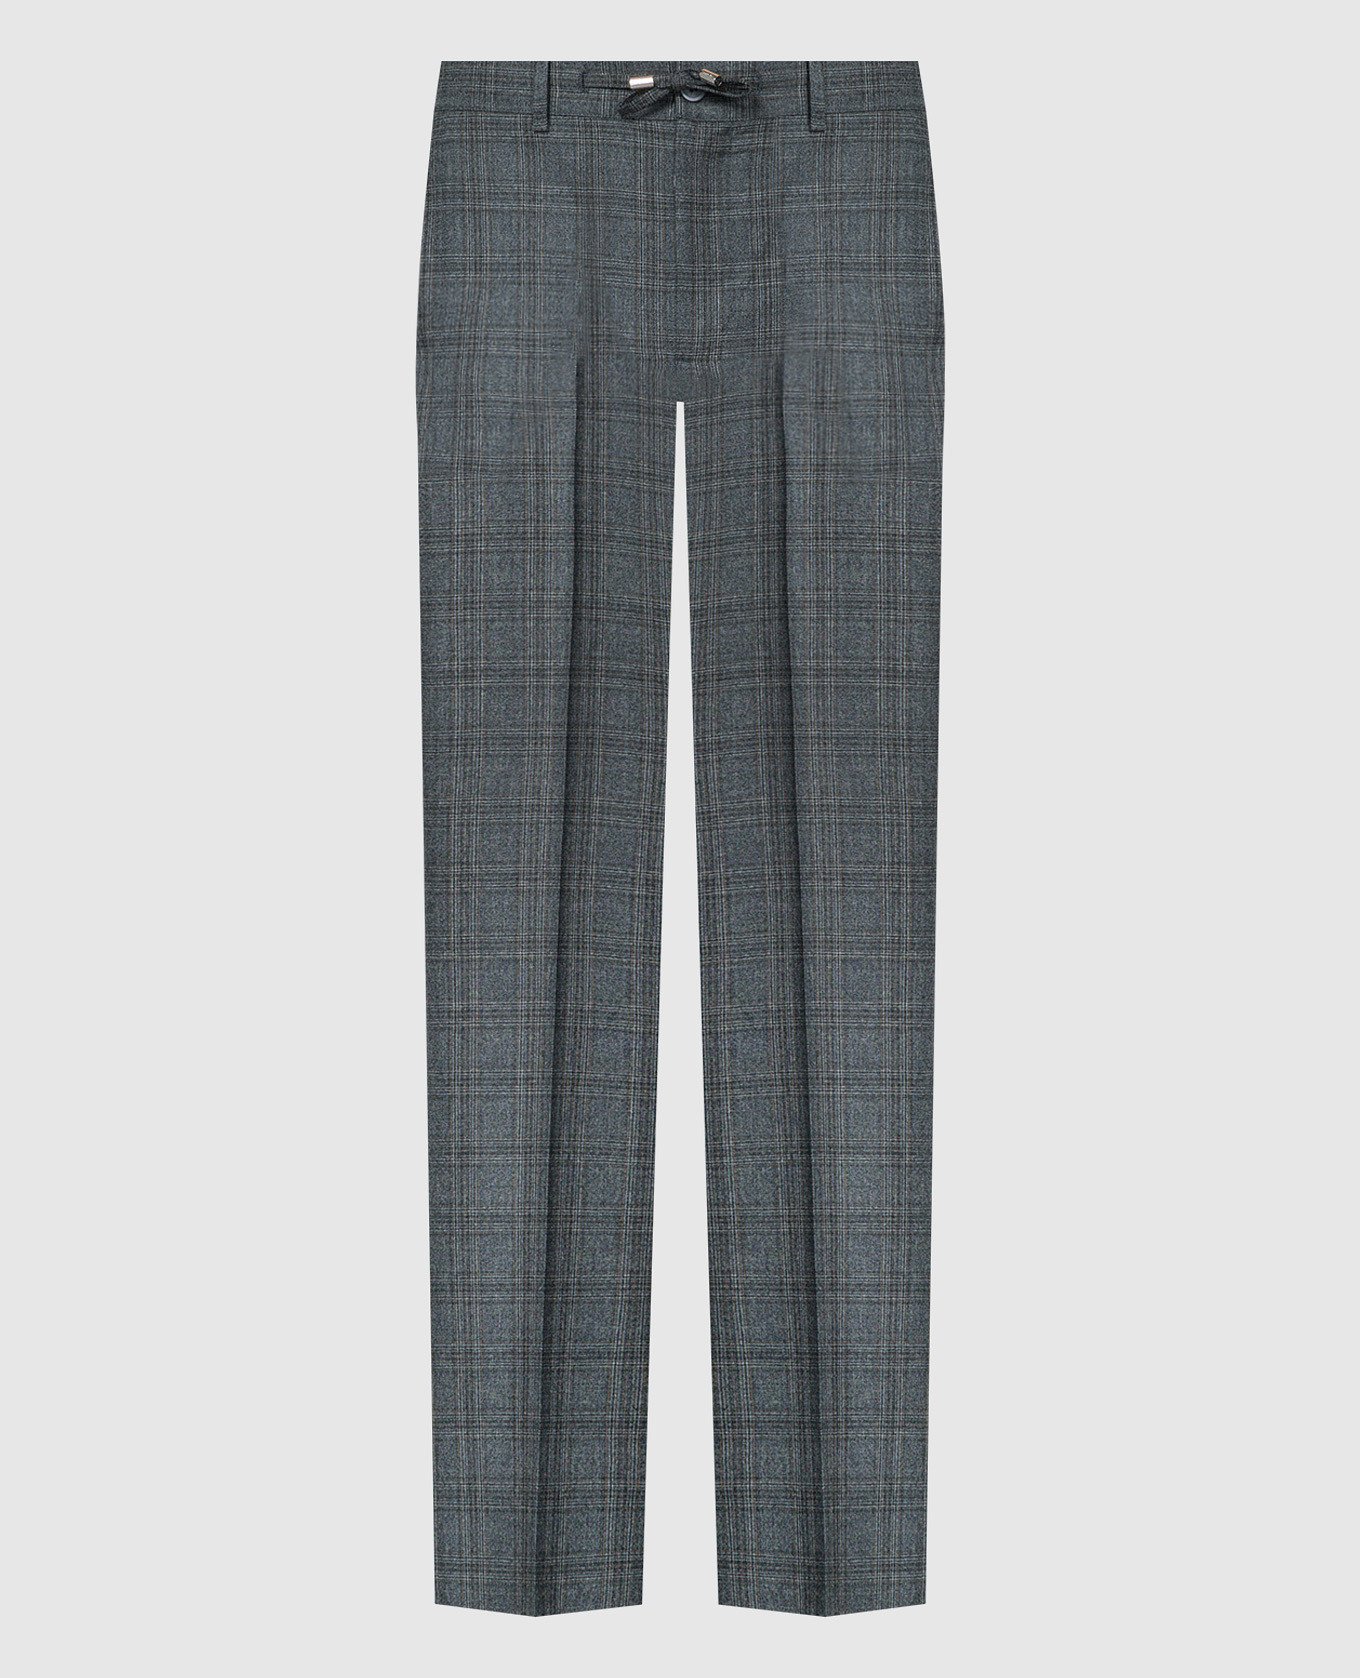 Gray checkered wool pants